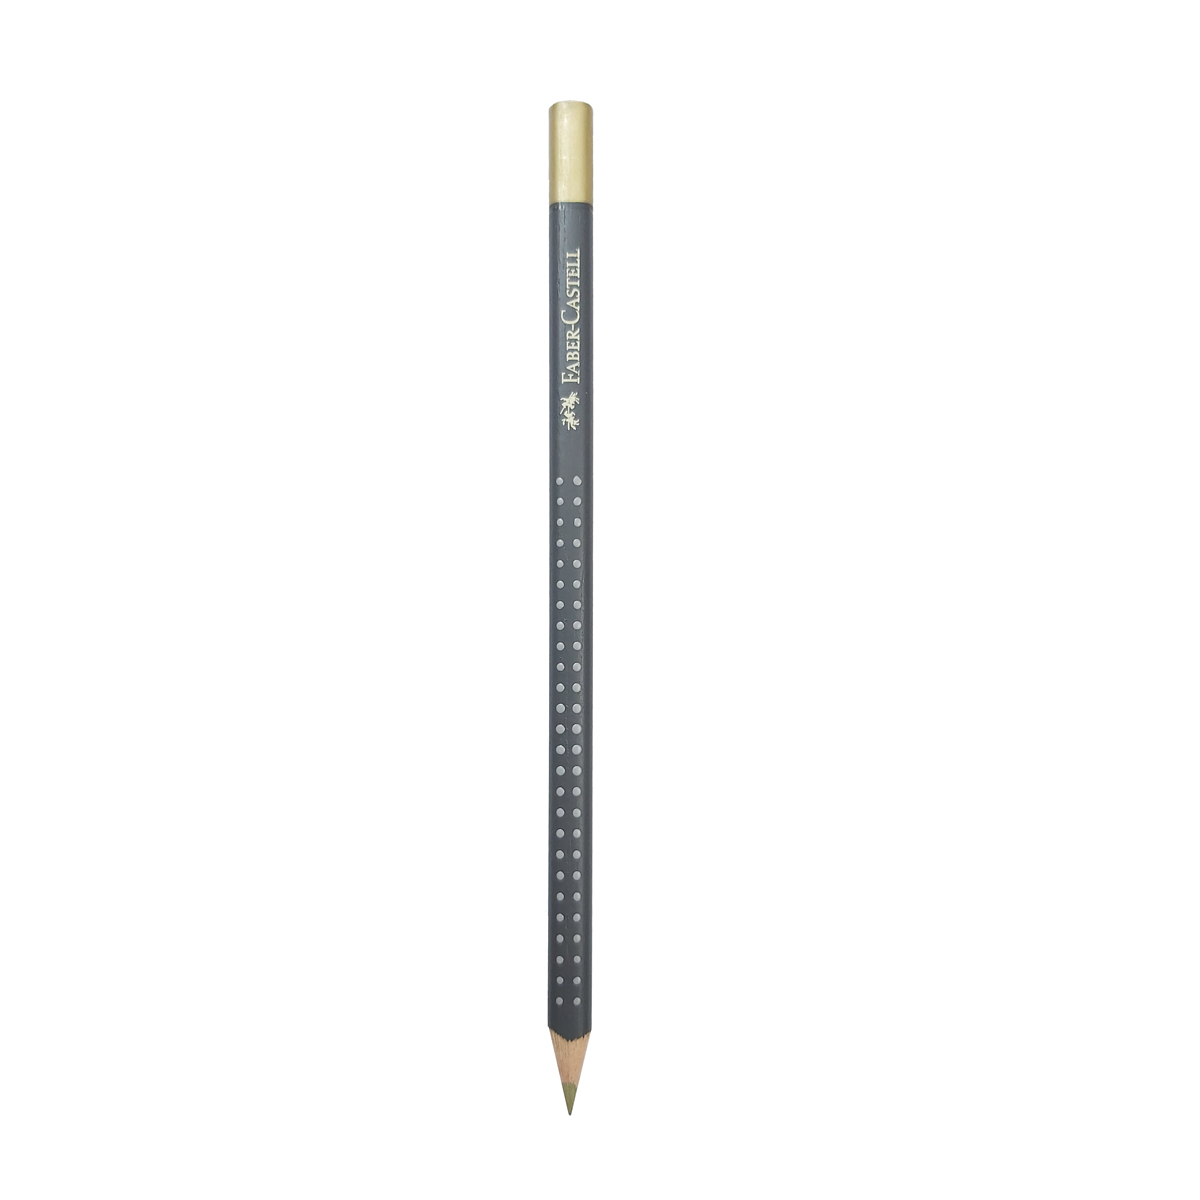  مداد رنگی فابر کاستل مدل آرت گریپ کد 250